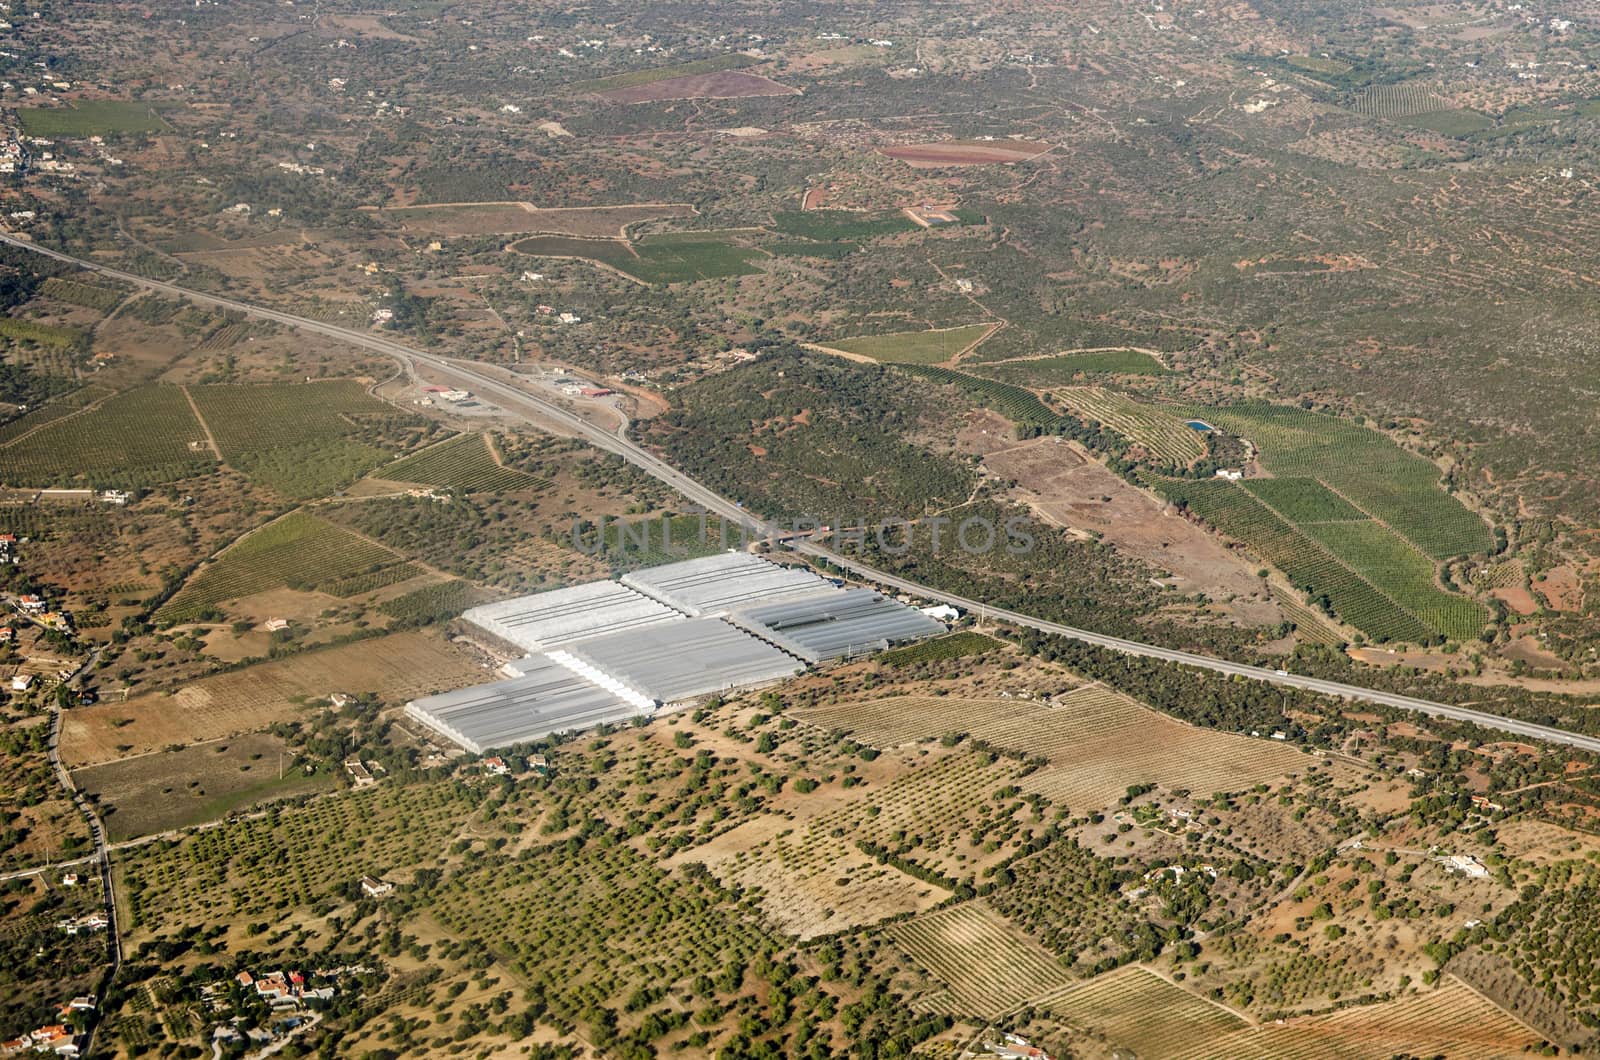 Greenhouses in Fazenda Nova, Portugal - aerial view by BasPhoto